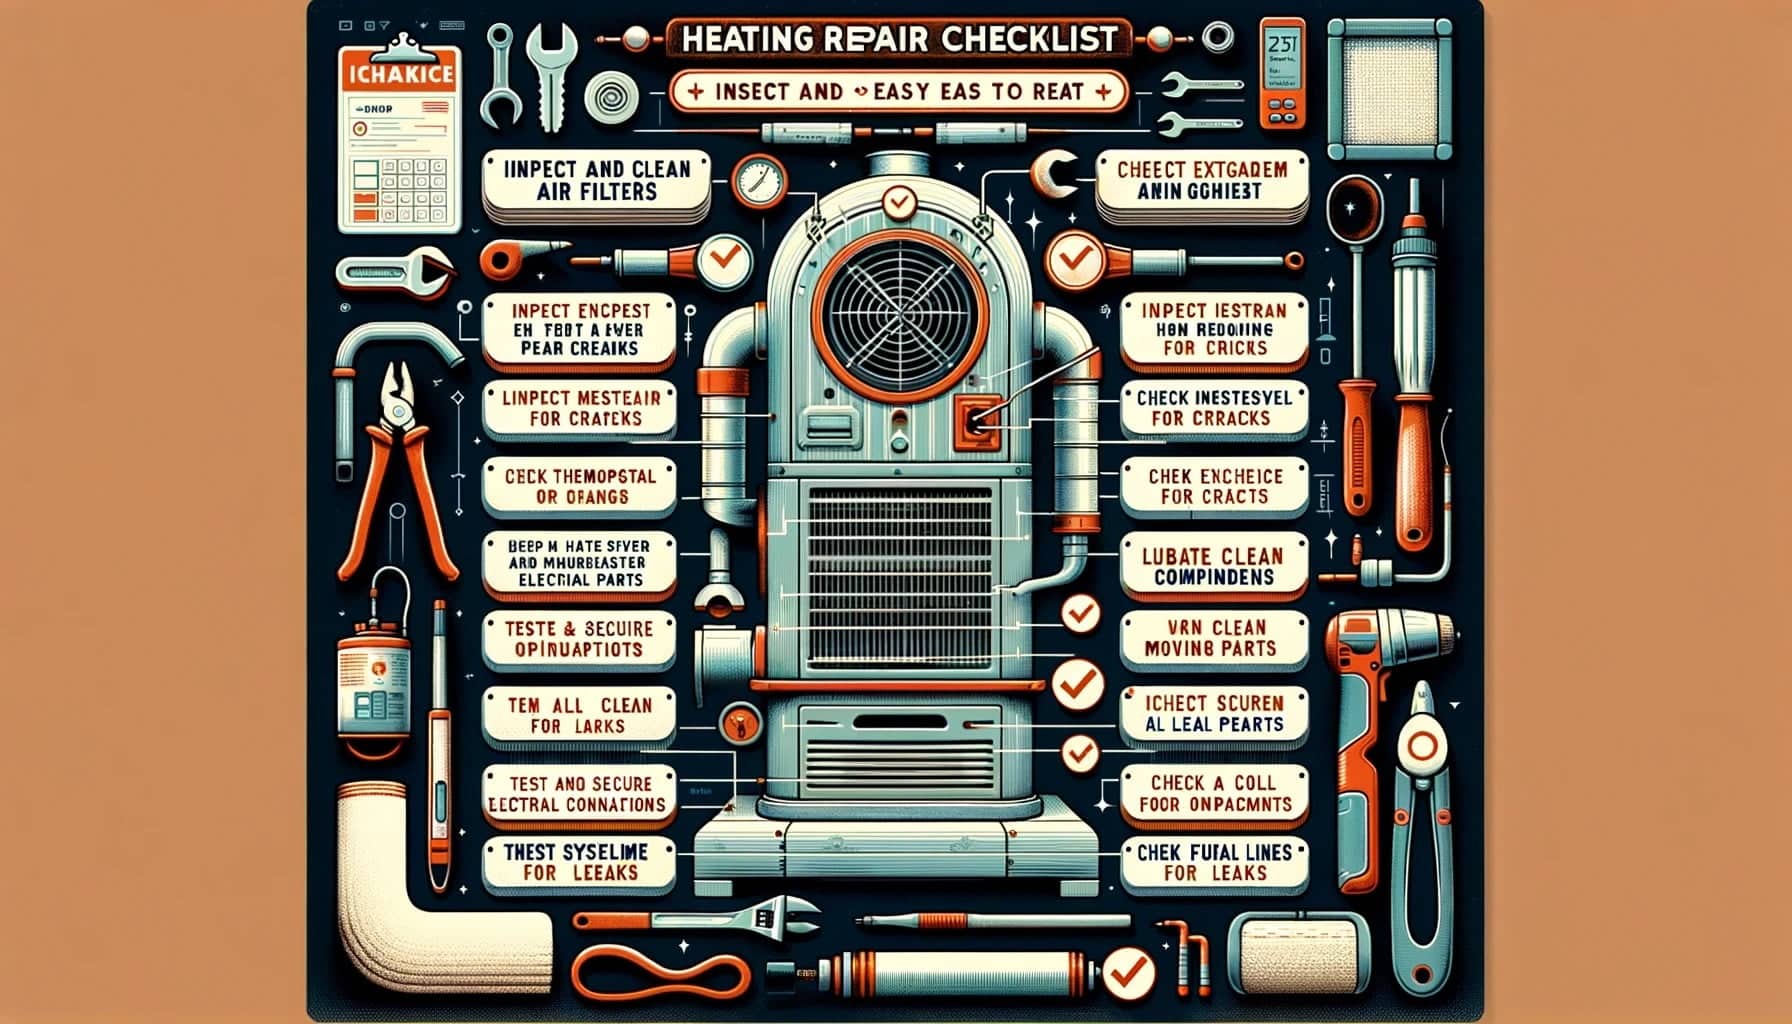 Heating repair checklist